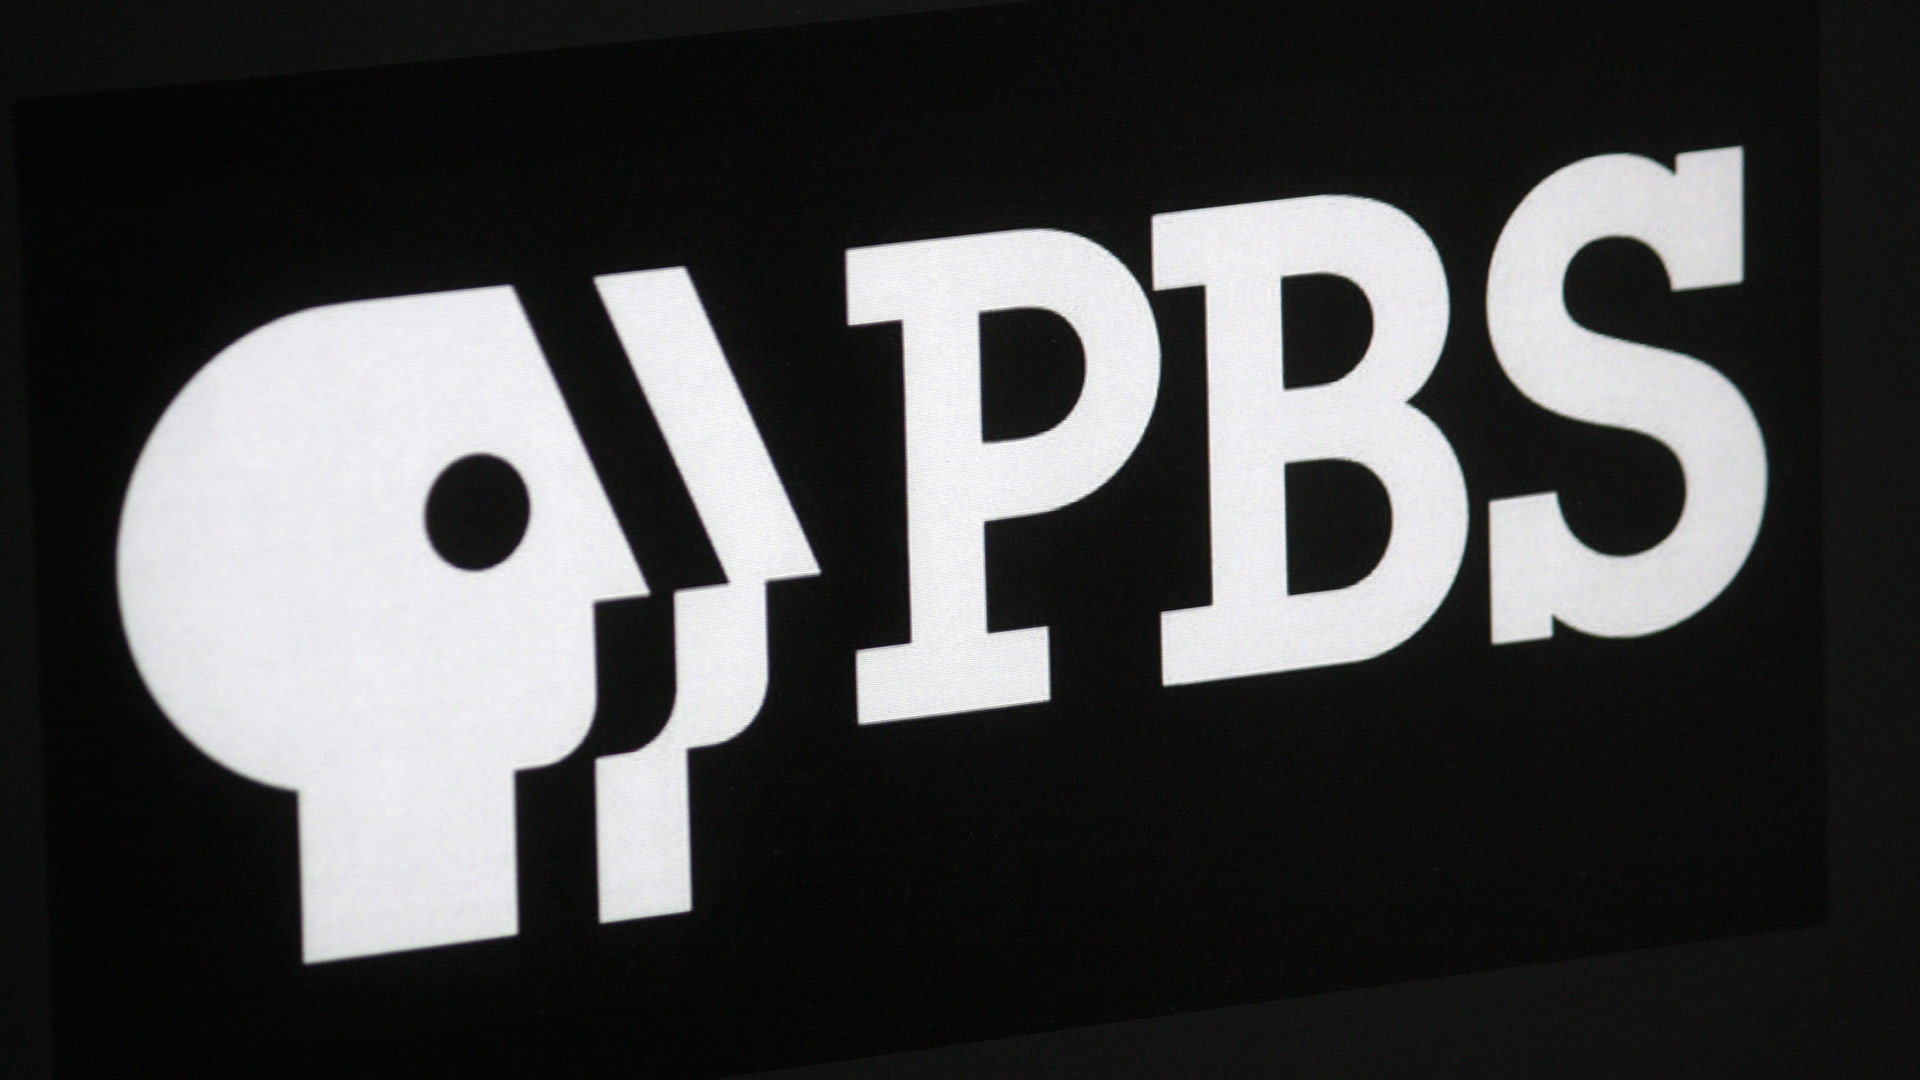 PBS logo on a black background